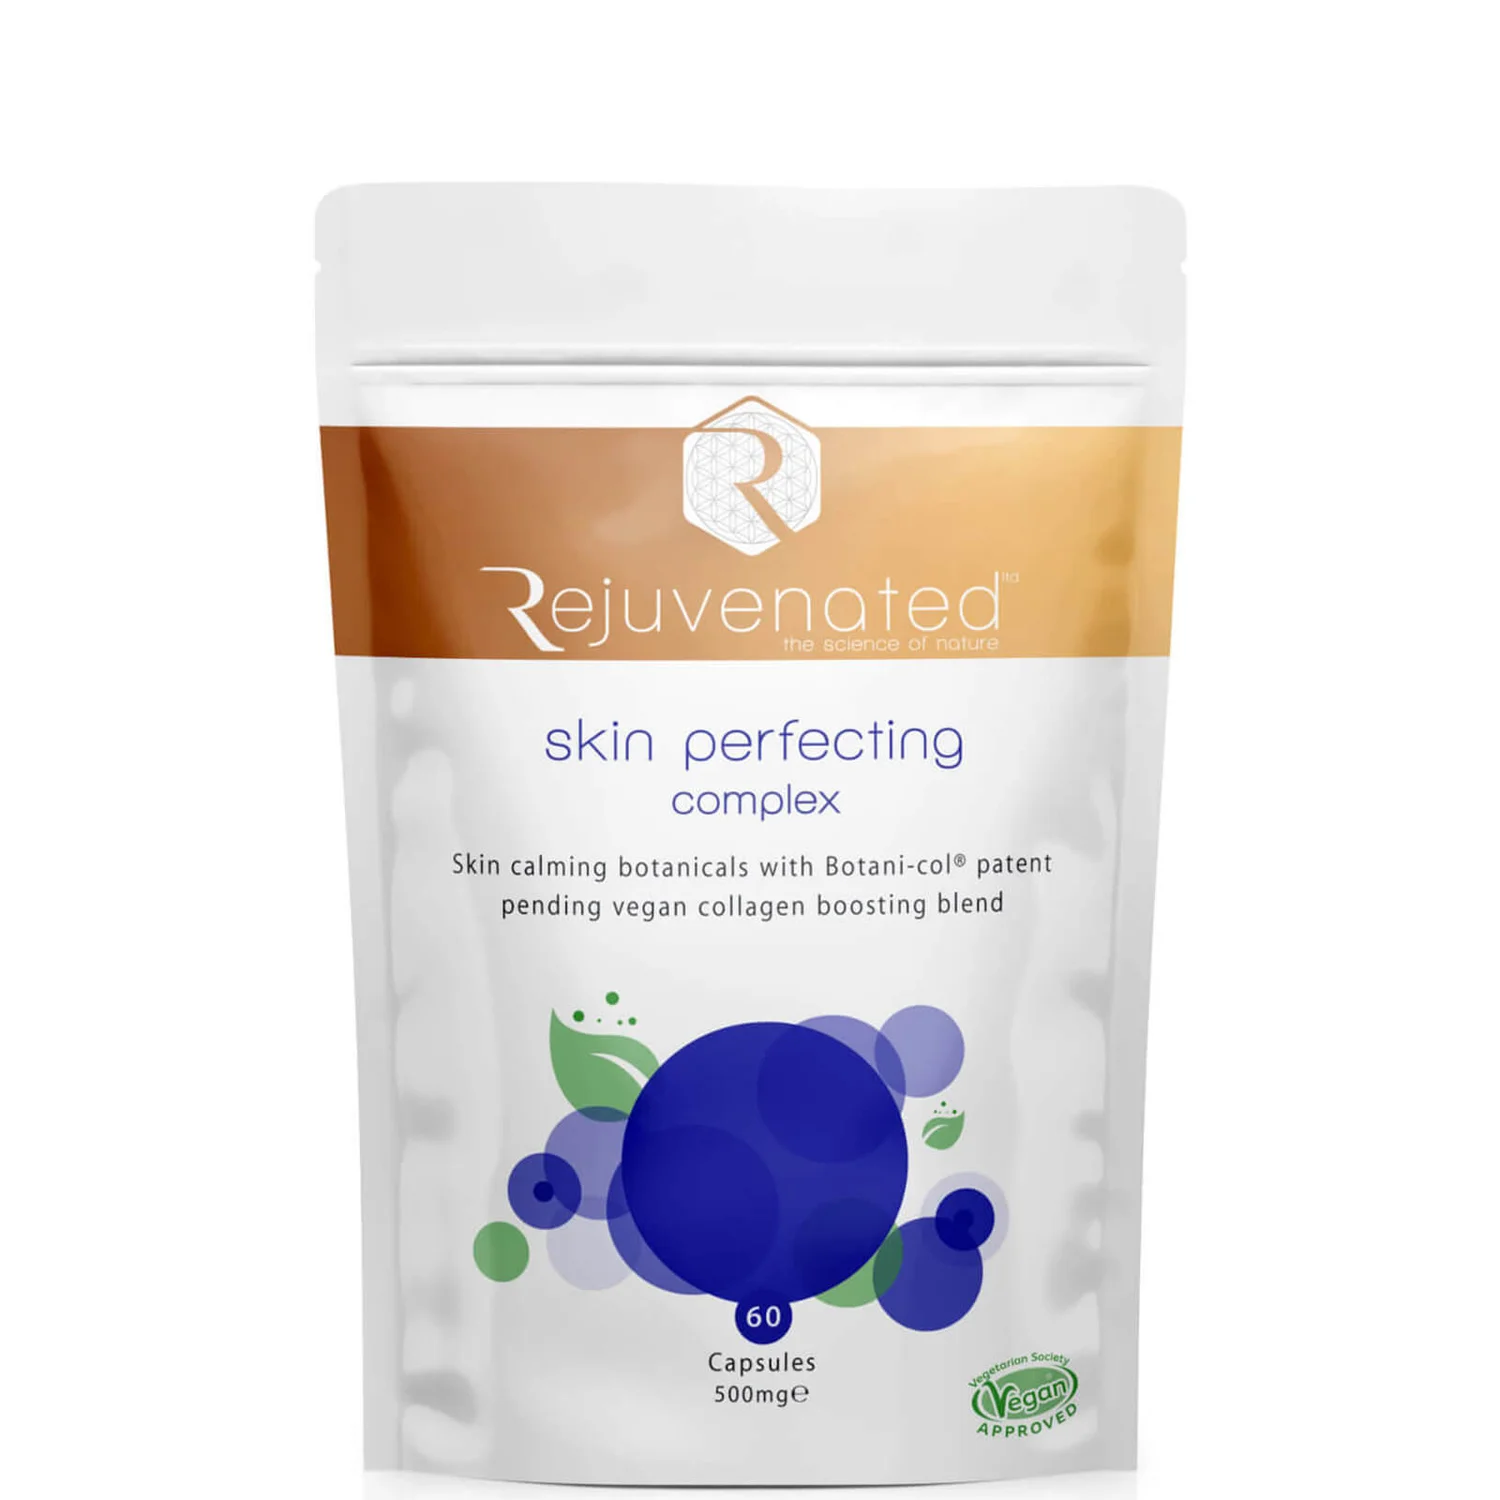 Rejuvenated Ltd Skin Perfecting Complex - 60 Capsules centella asiatica skin products